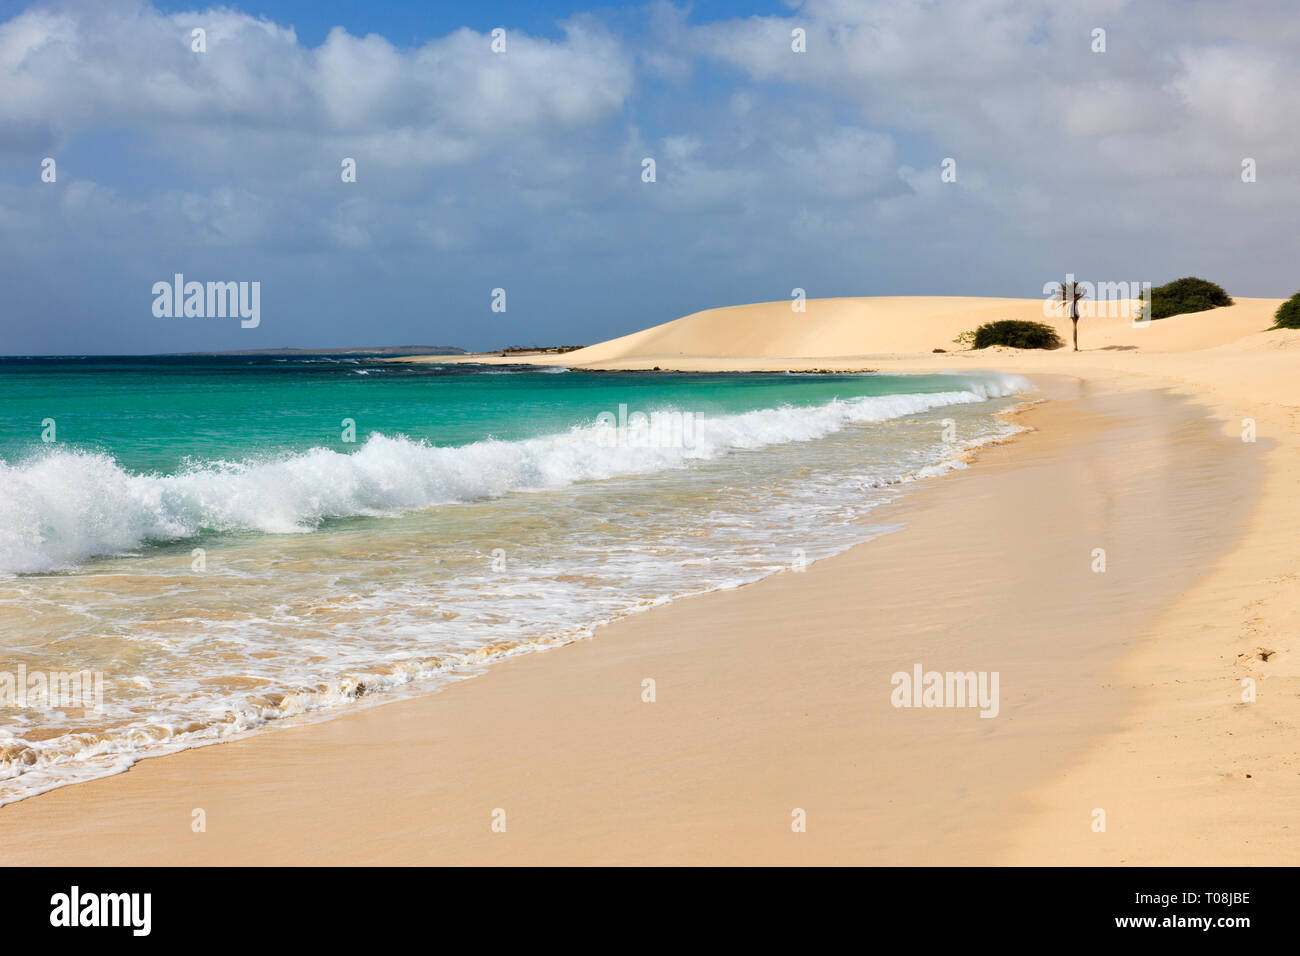 Atlantic waves crashing along shoreline of empty white sand beach with turquoise sea. Praia de Chaves, Rabil, Boa Vista, Cape Verde Islands, Africa Stock Photo